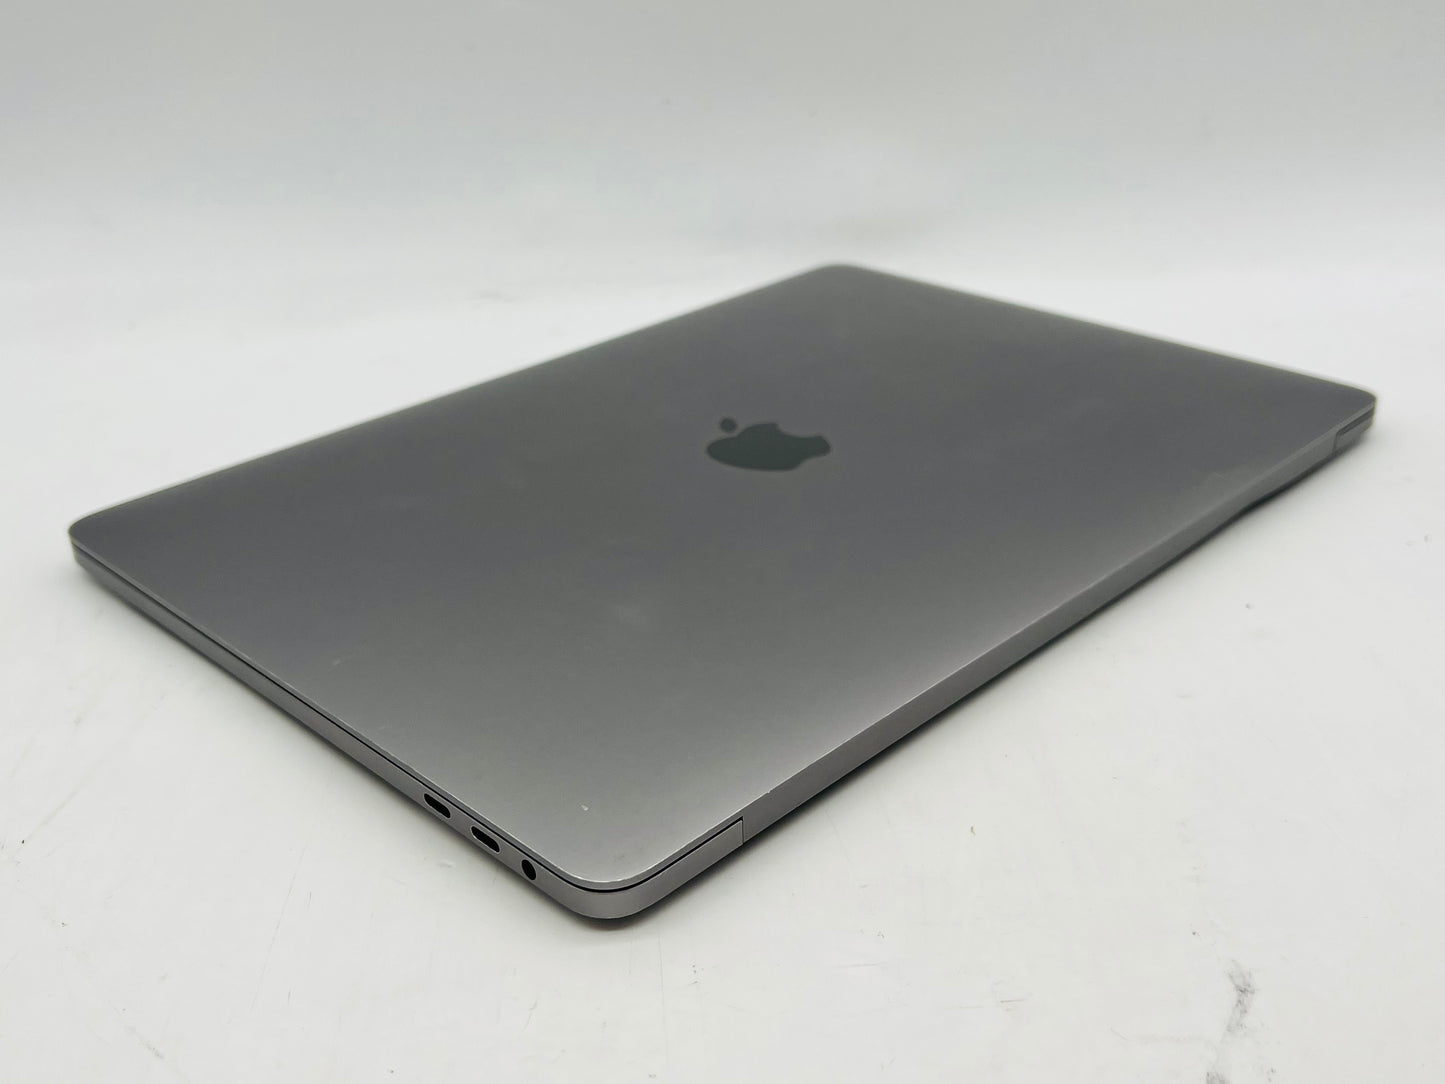 Apple 2019 MacBook Pro 13 in TB 2.4GHz i5 16GB RAM 256GB SSD IIPG655 - Good